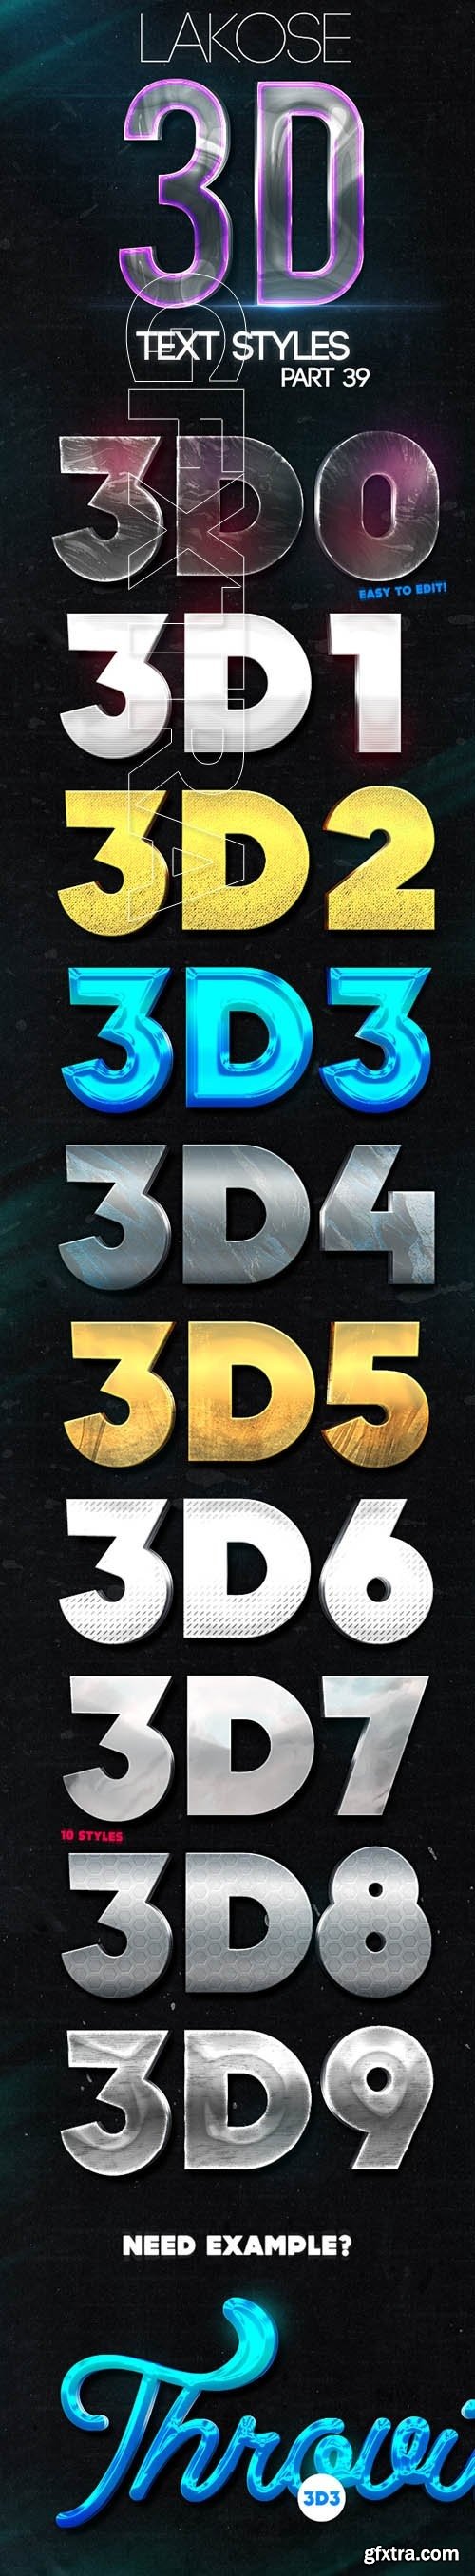 GraphicRiver - Lakose 3D Text Styles Part 39 22644984